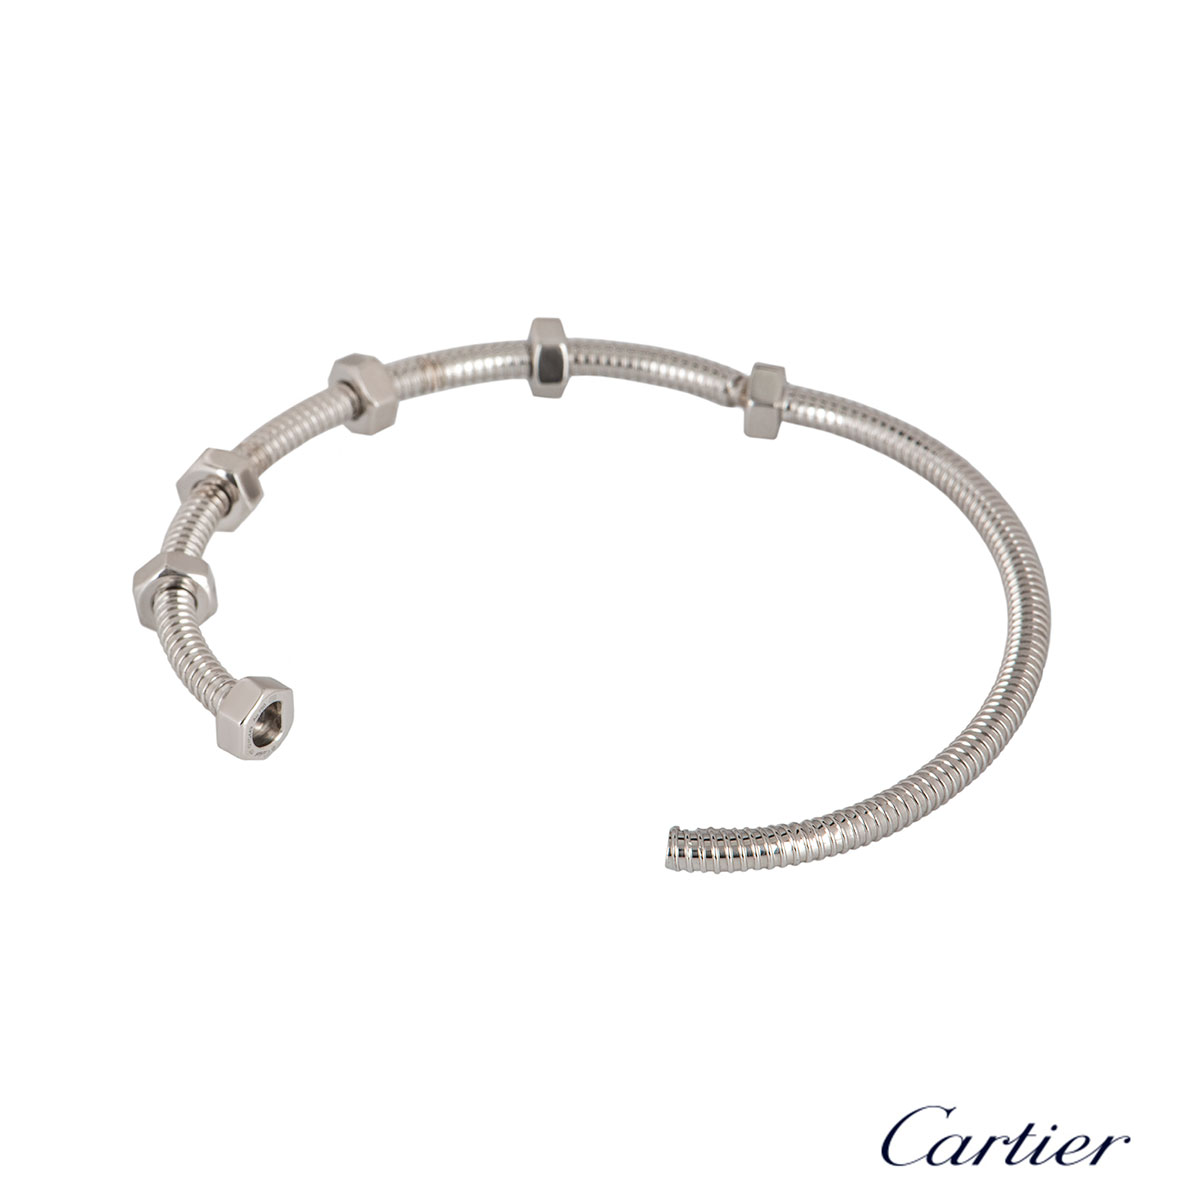 cartier ecrou bracelet how to open